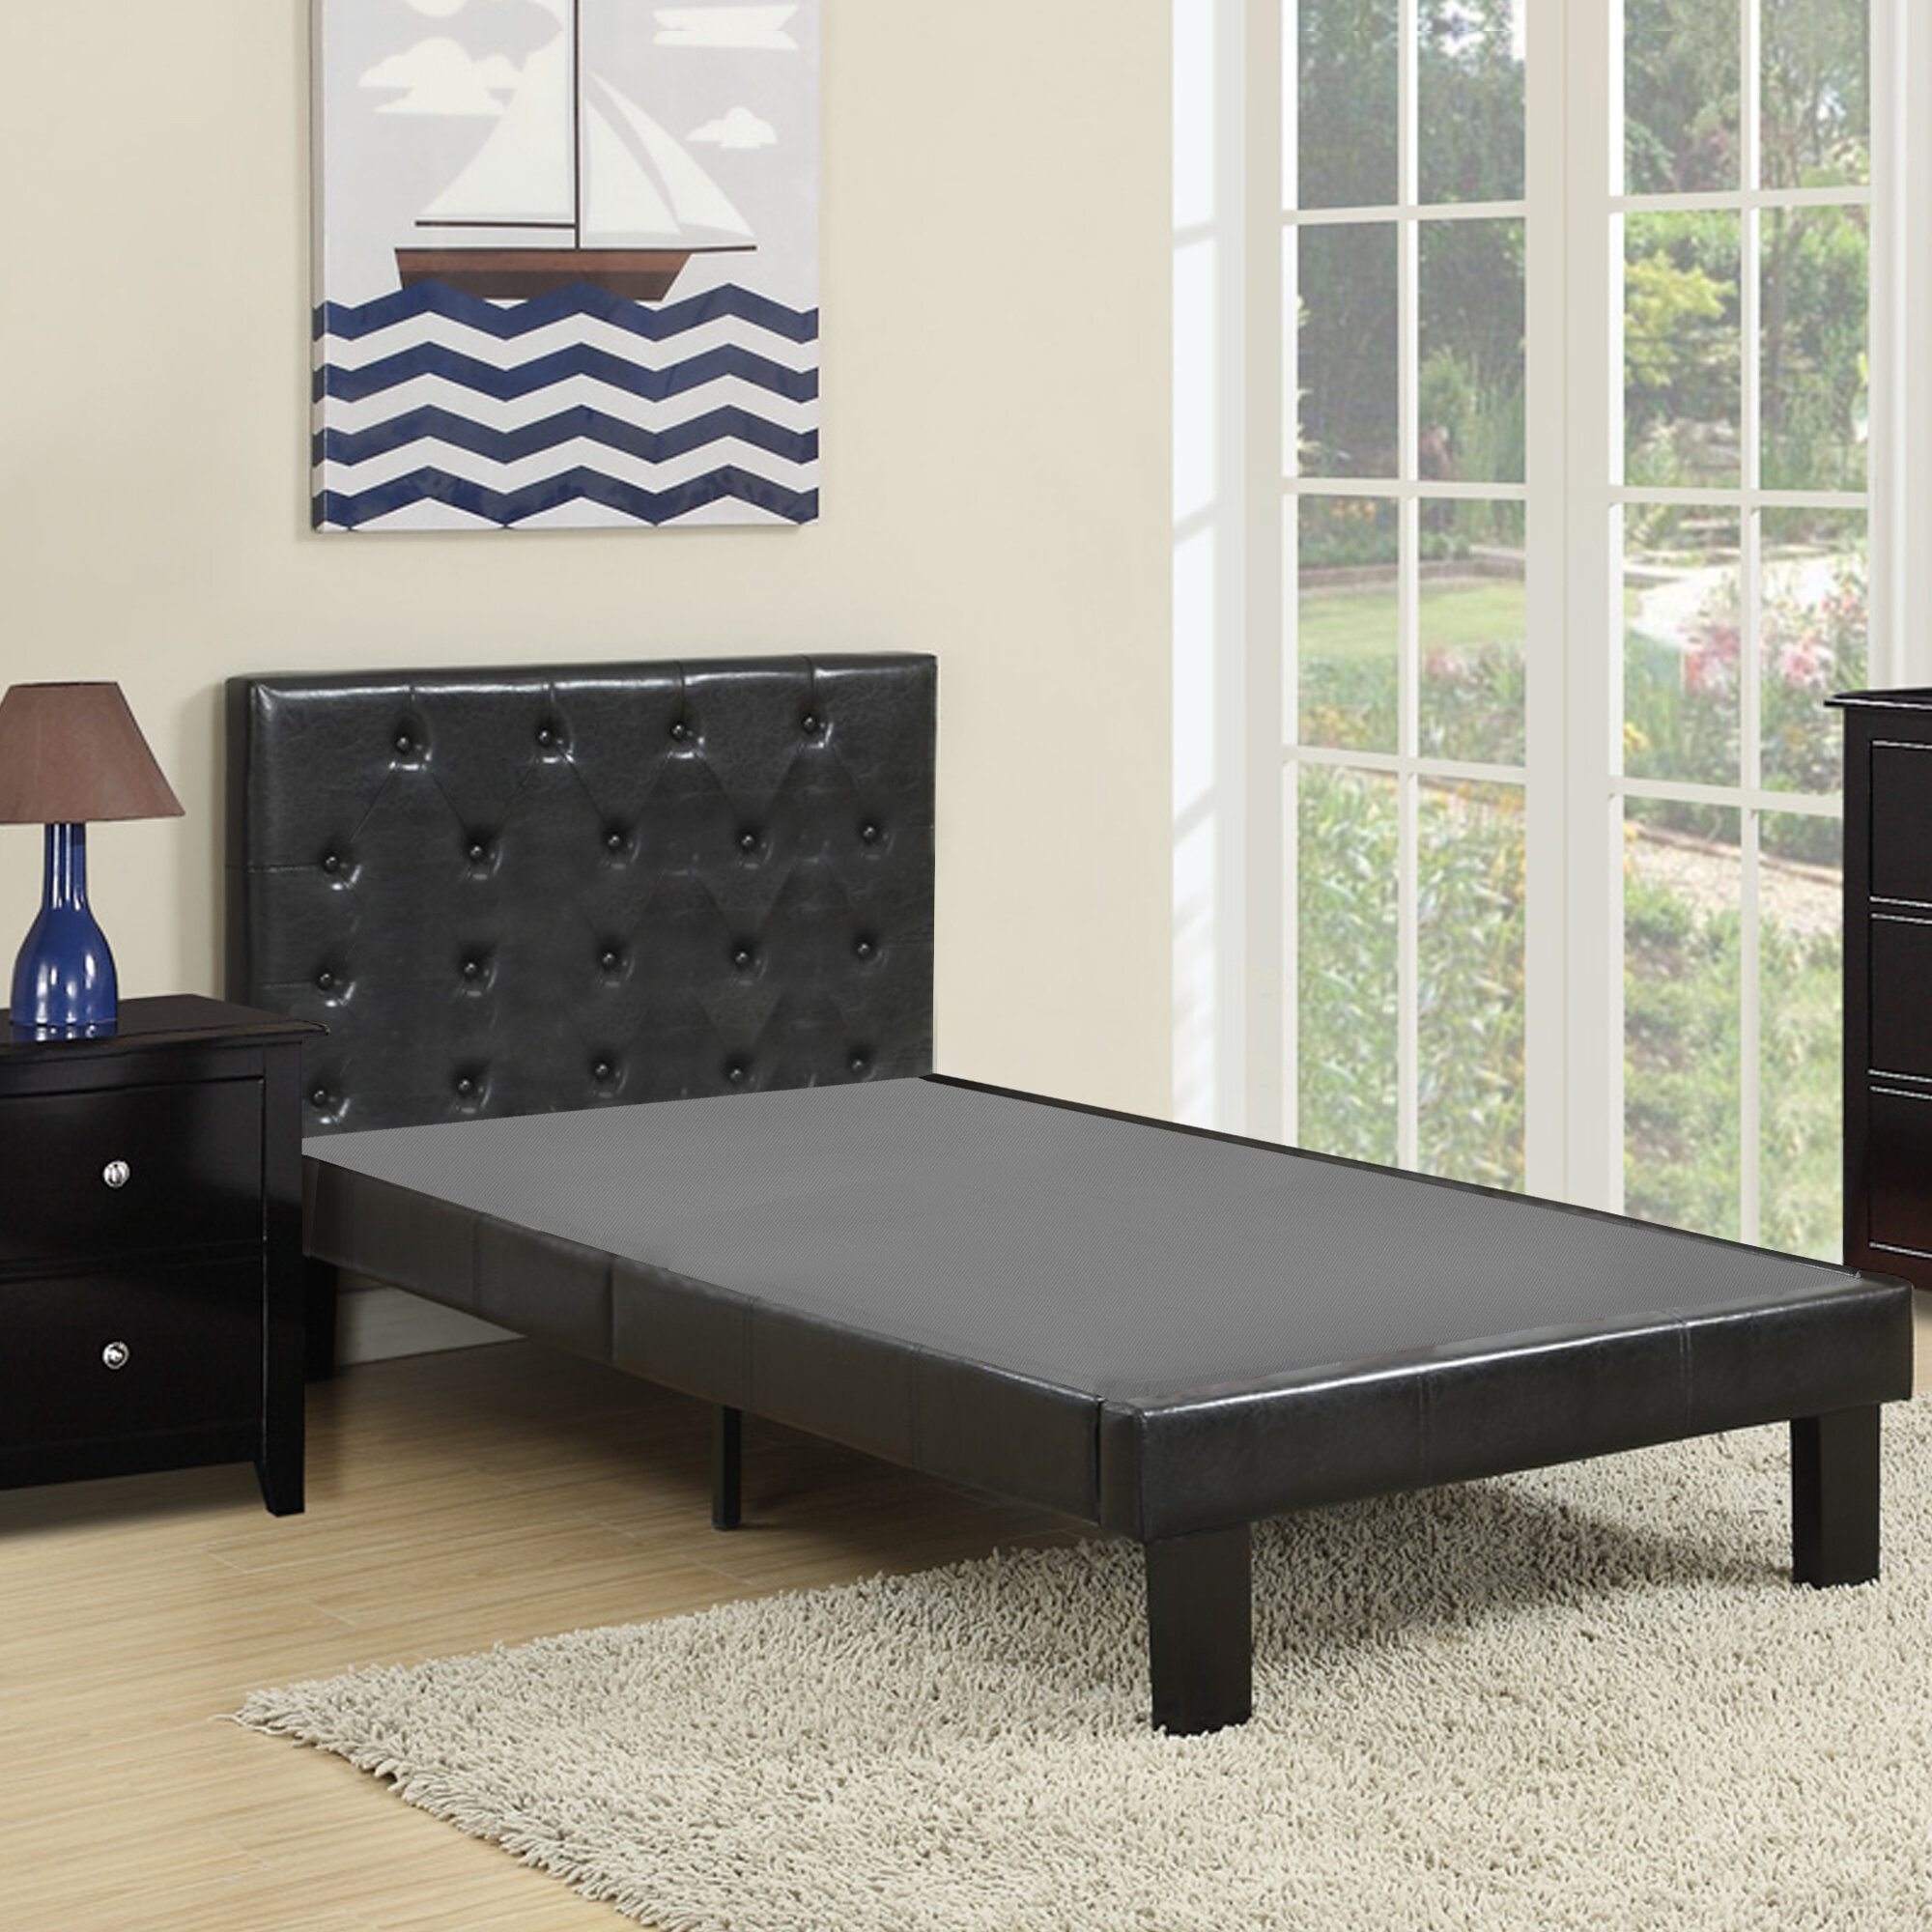 Mattress Support Bunkie Board 1.5 Inch Bunk Platform Beds Wooden Twin Size New 